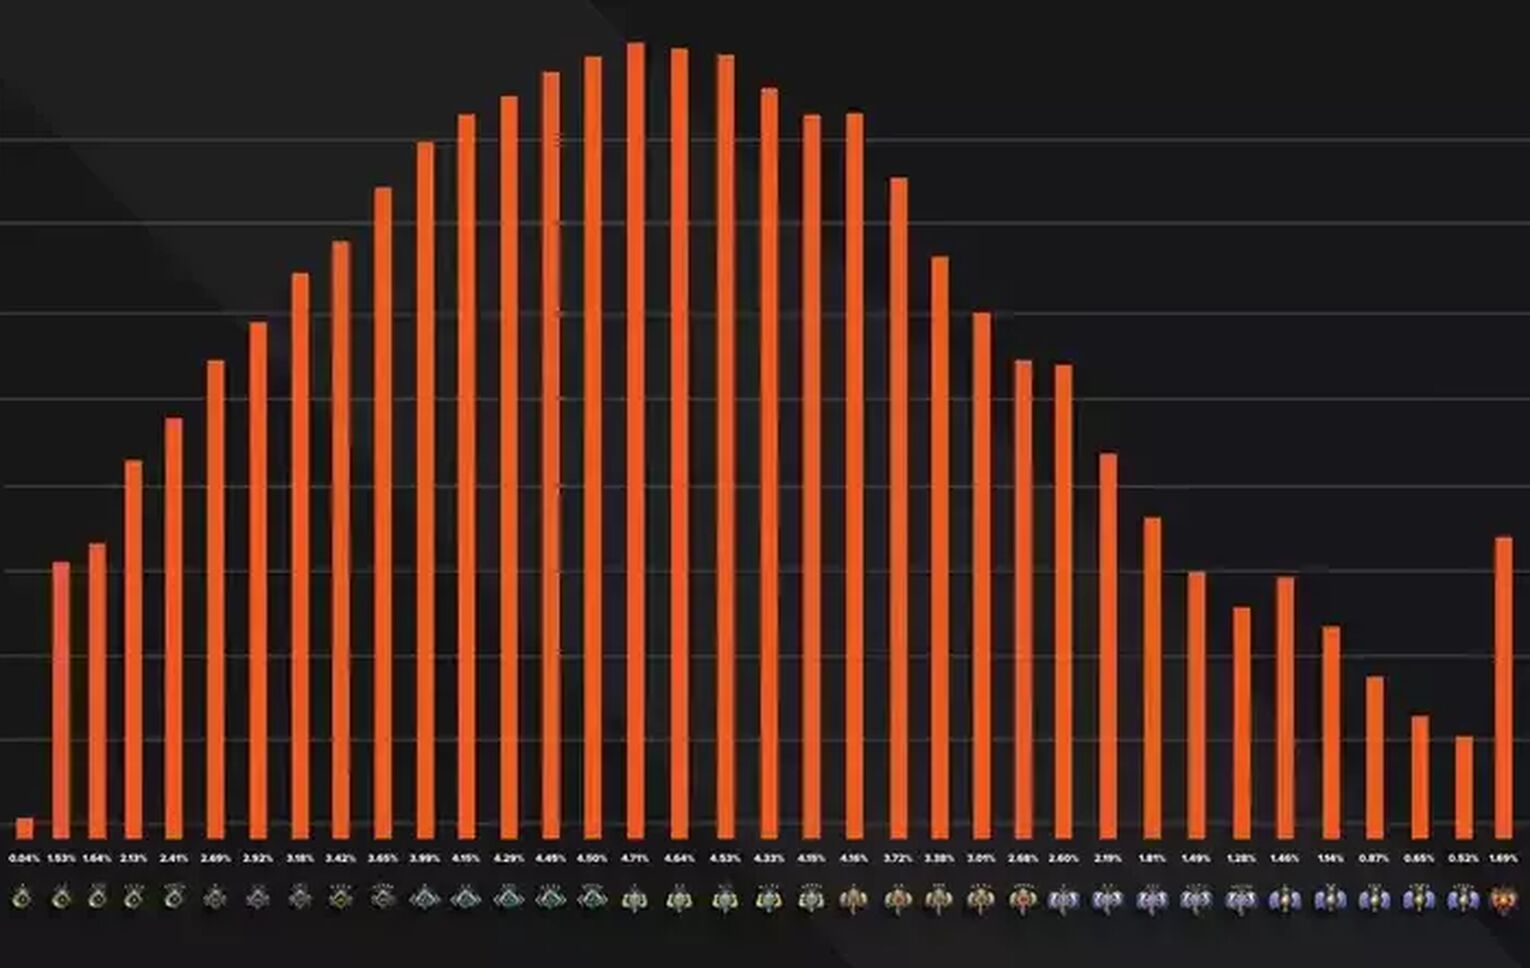 Dota 2 Legend Rank Statistics